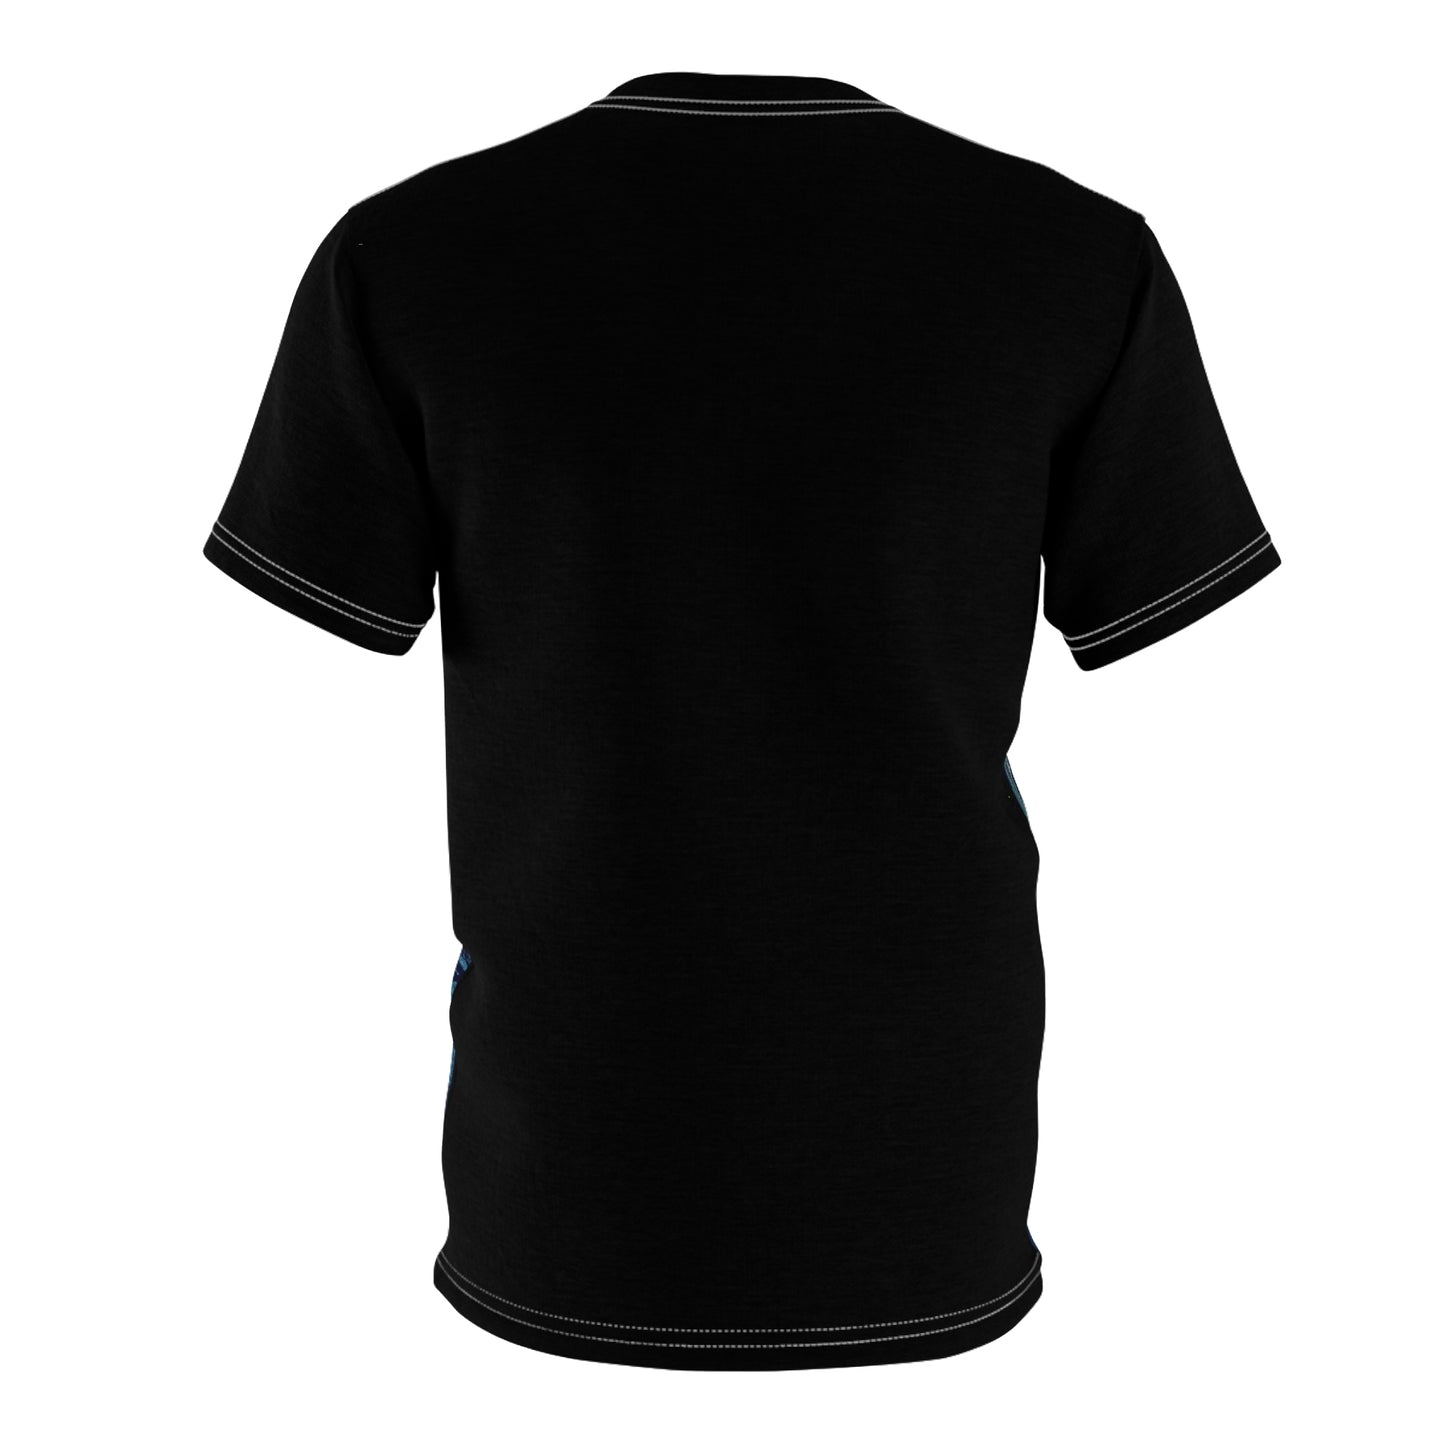 The Edge Of Destiny - Unisex All-Over Print Cut & Sew T-Shirt